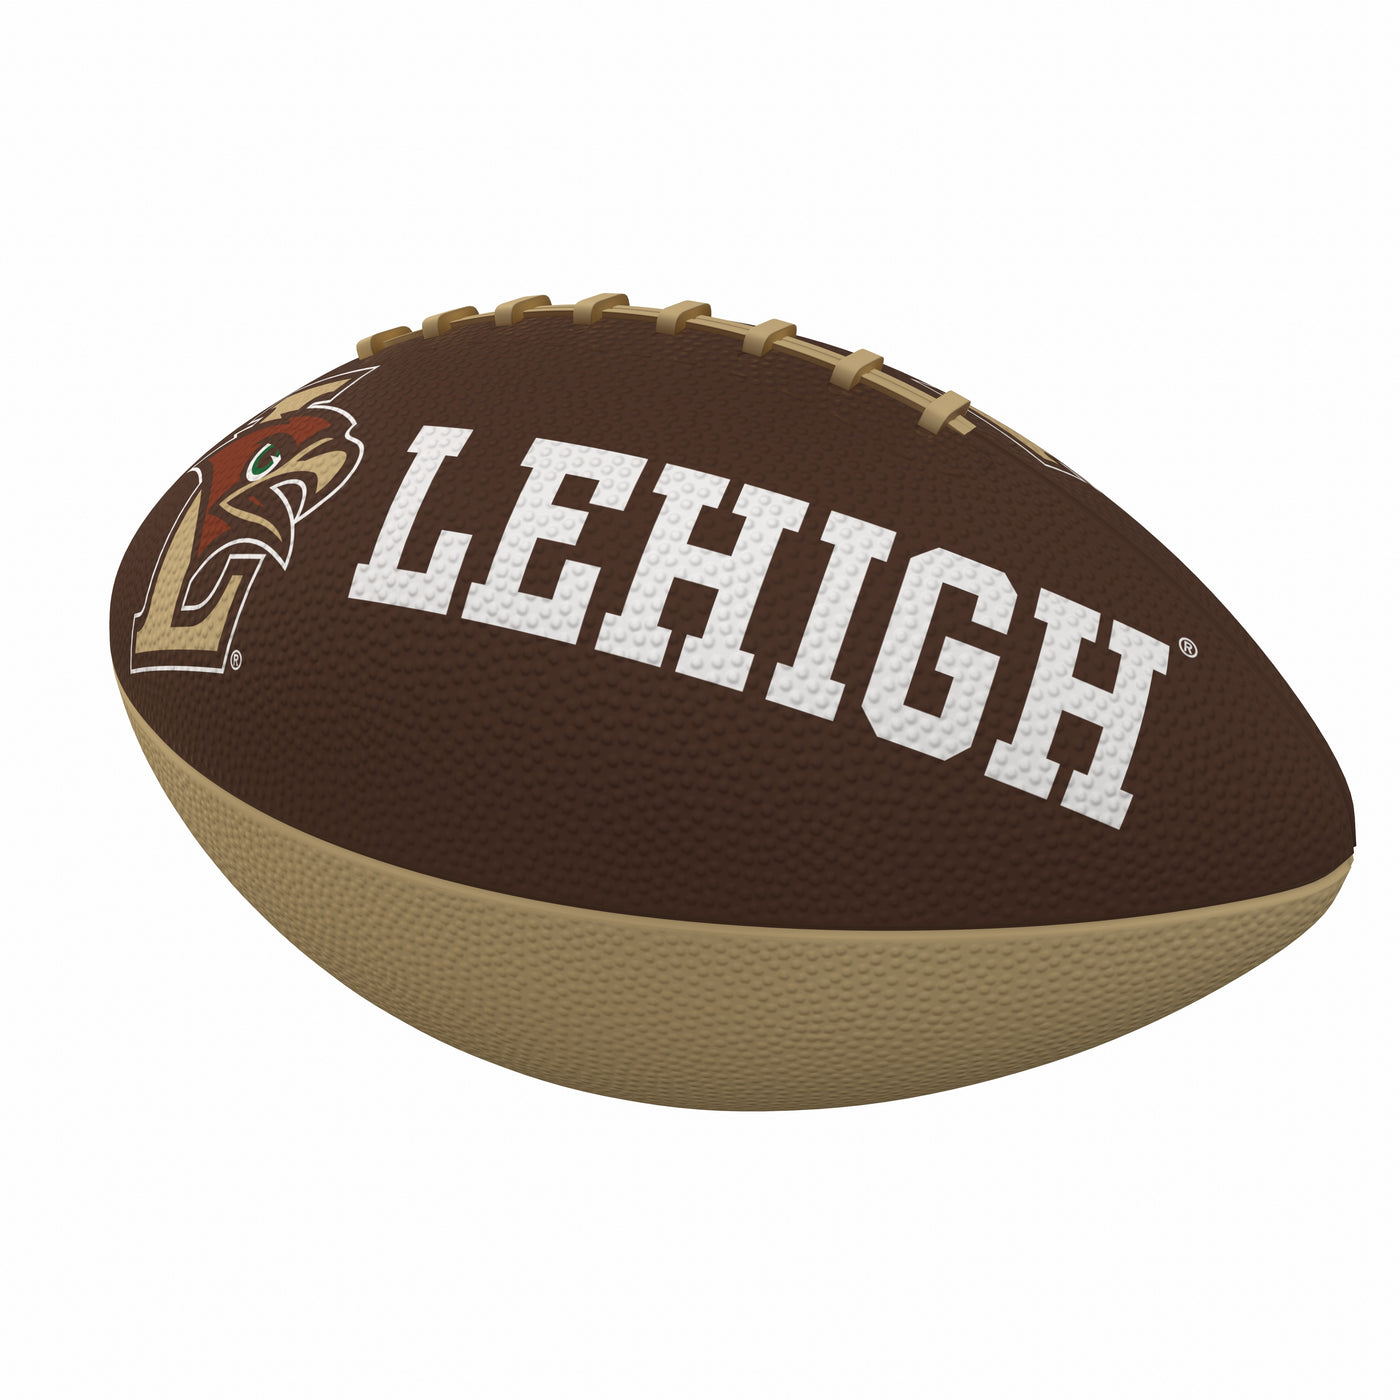 Lehigh Junior Size Rubber Football